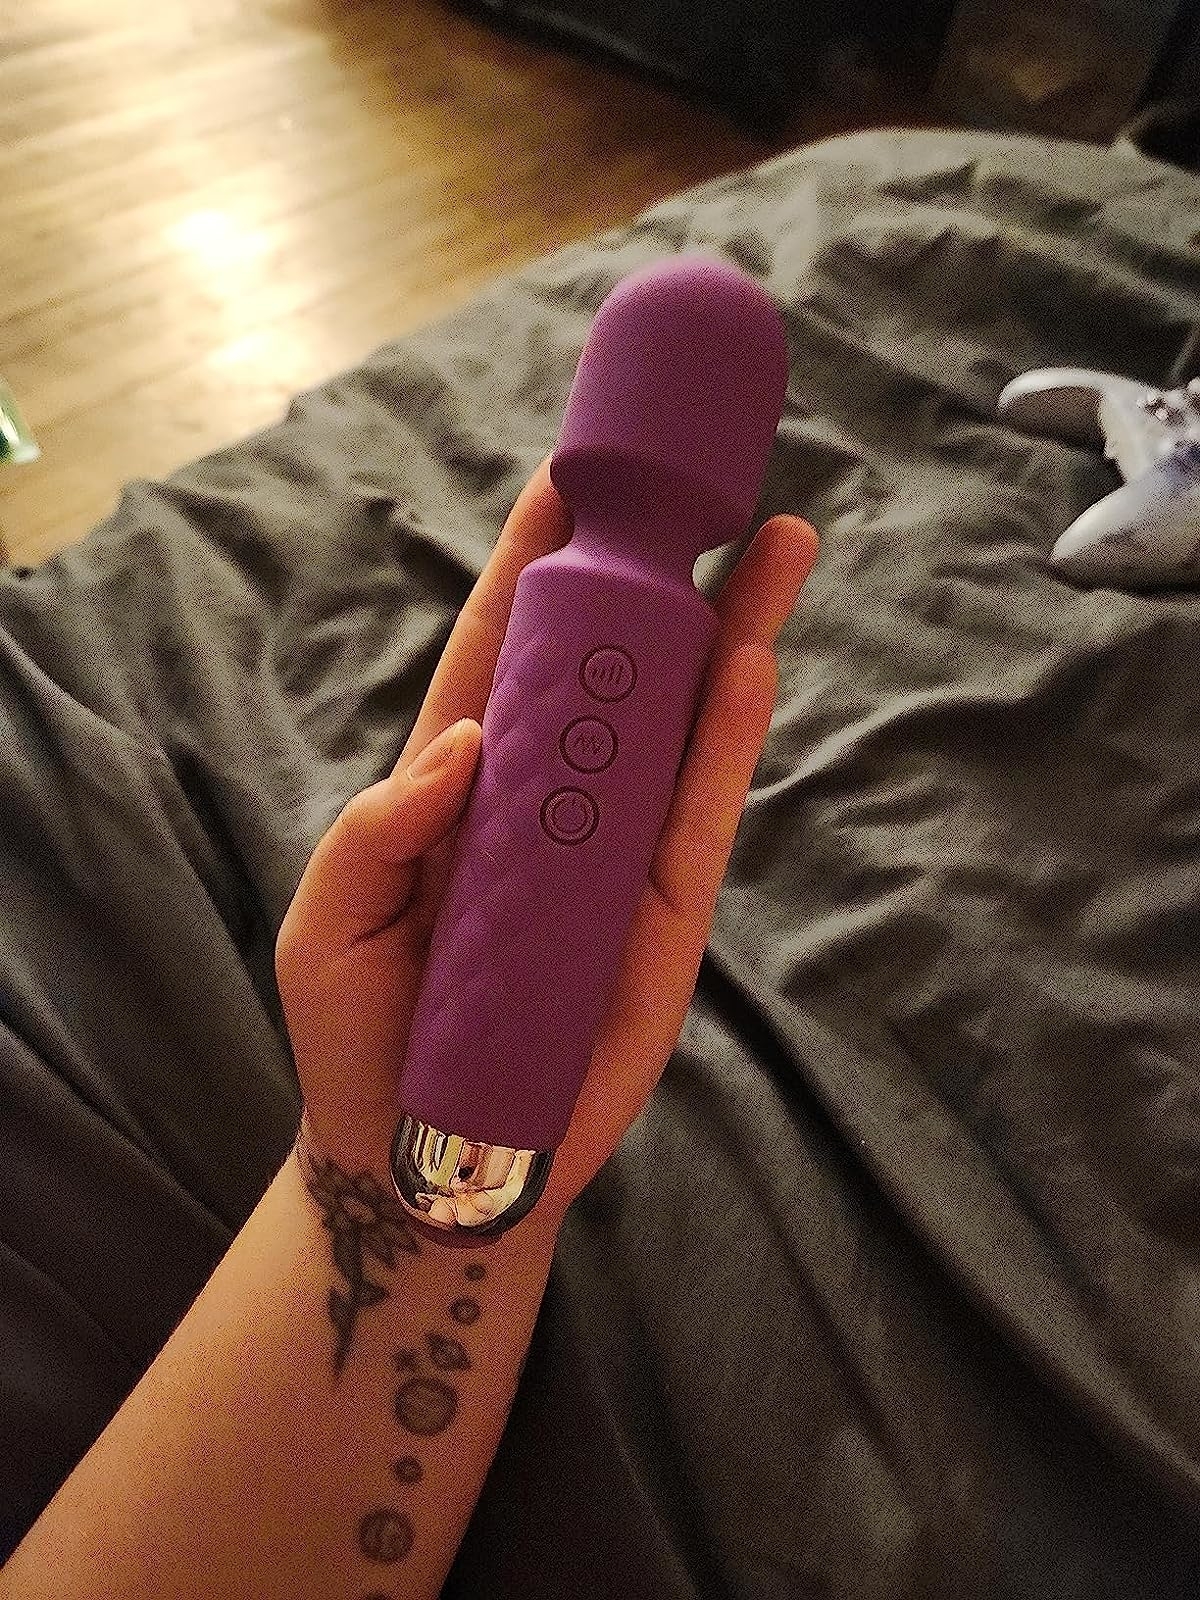 Hand holding purple mini wand vibrator